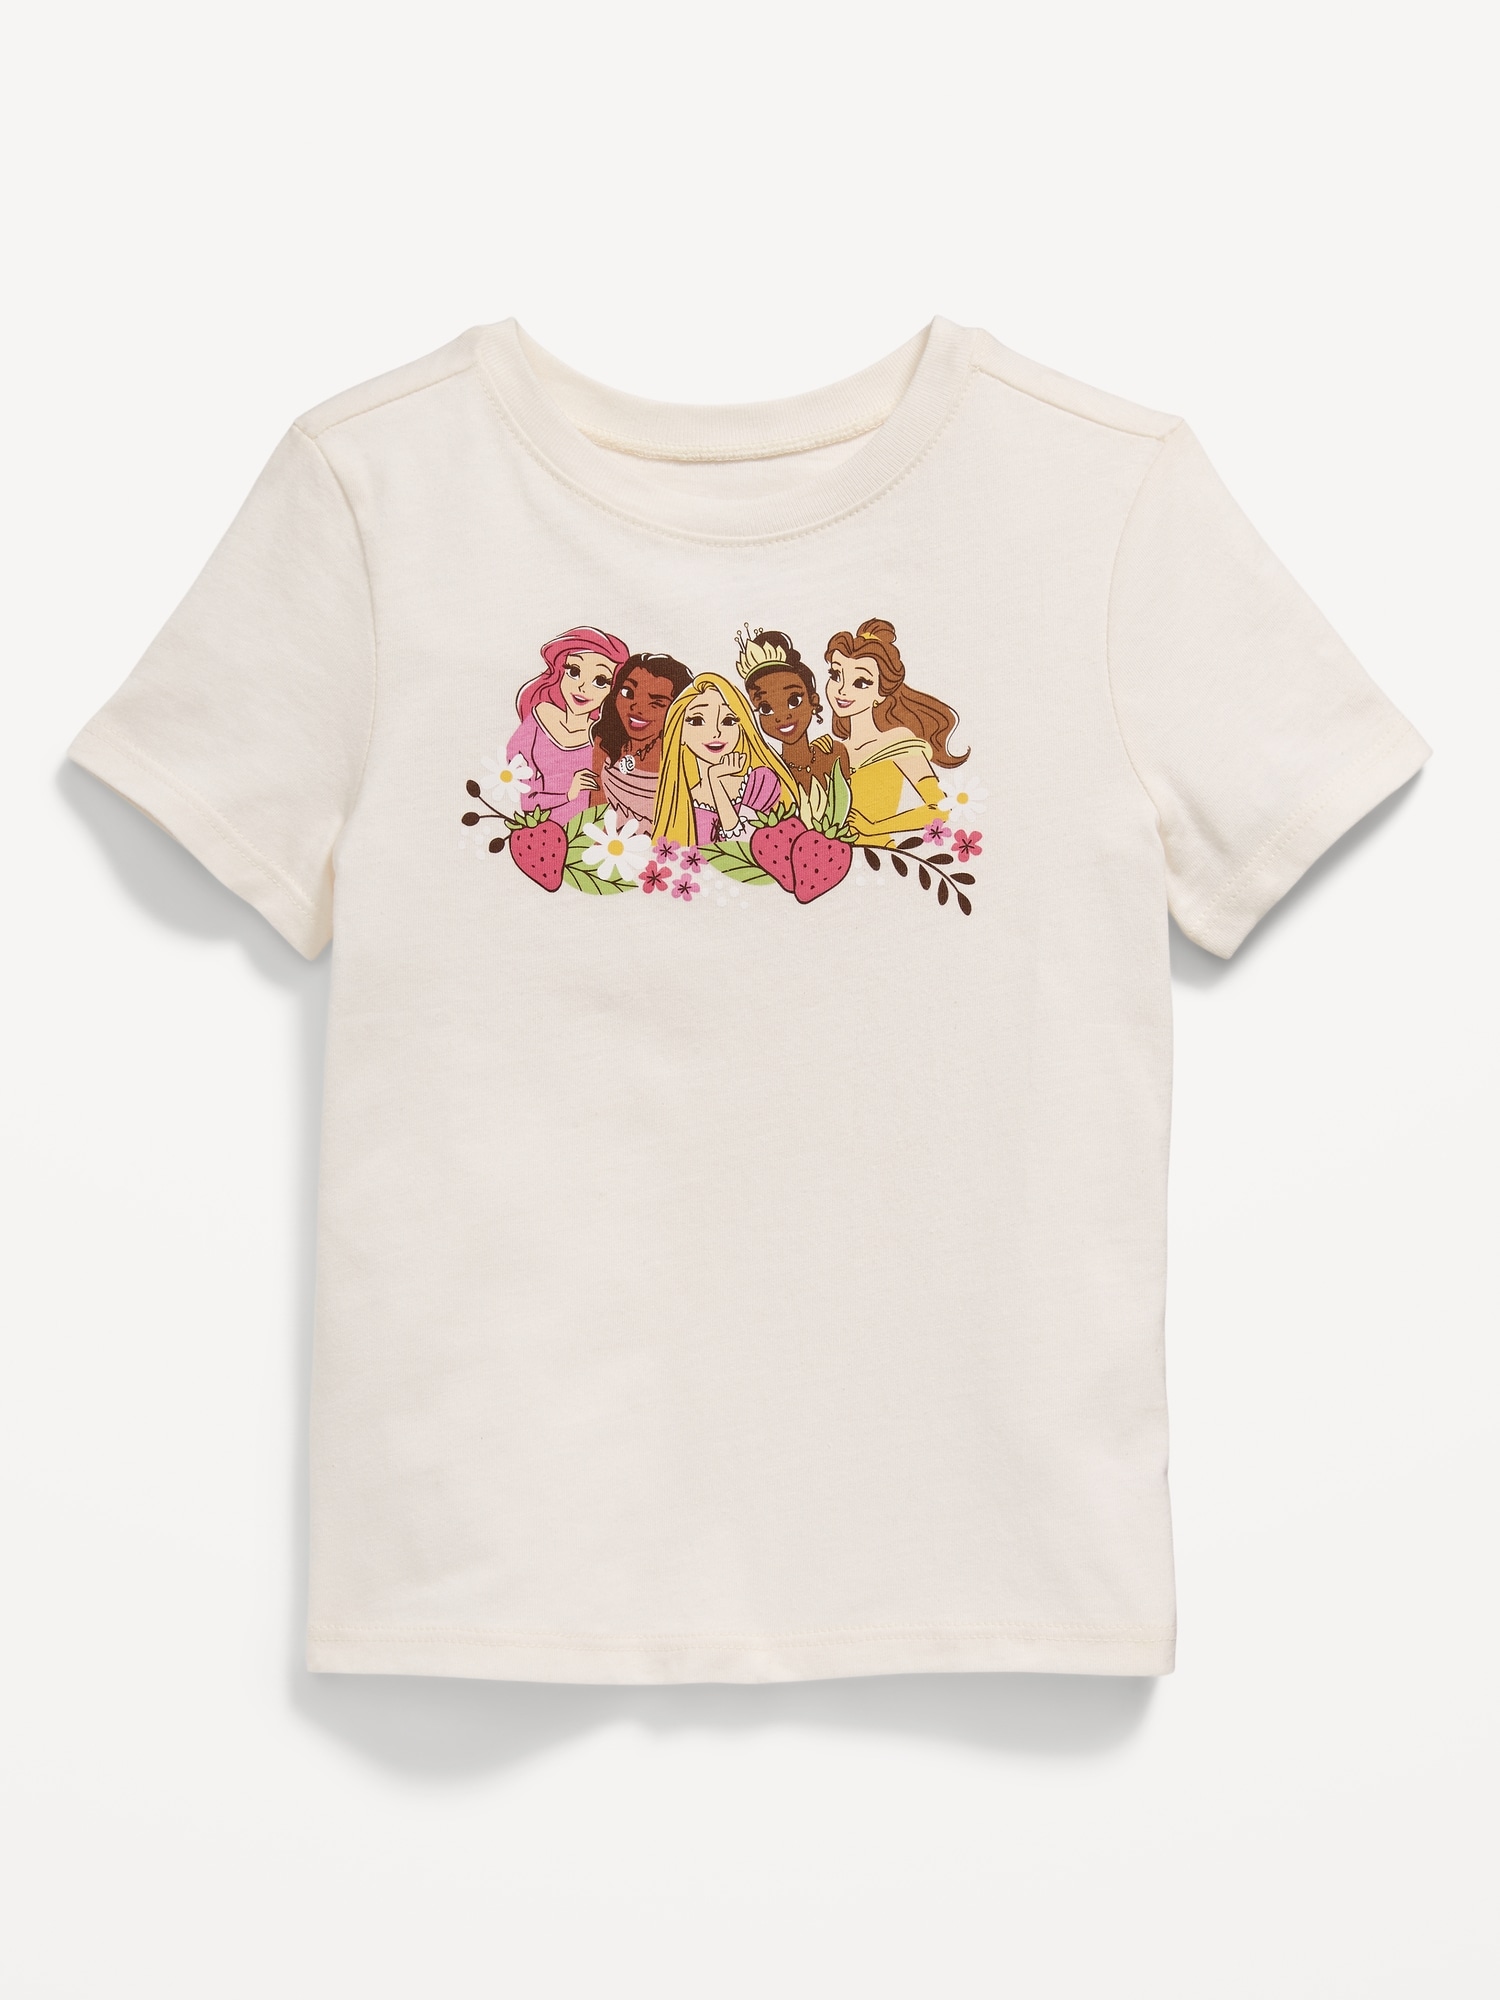 Disney© Princess Graphic T-Shirt for Toddler Girls